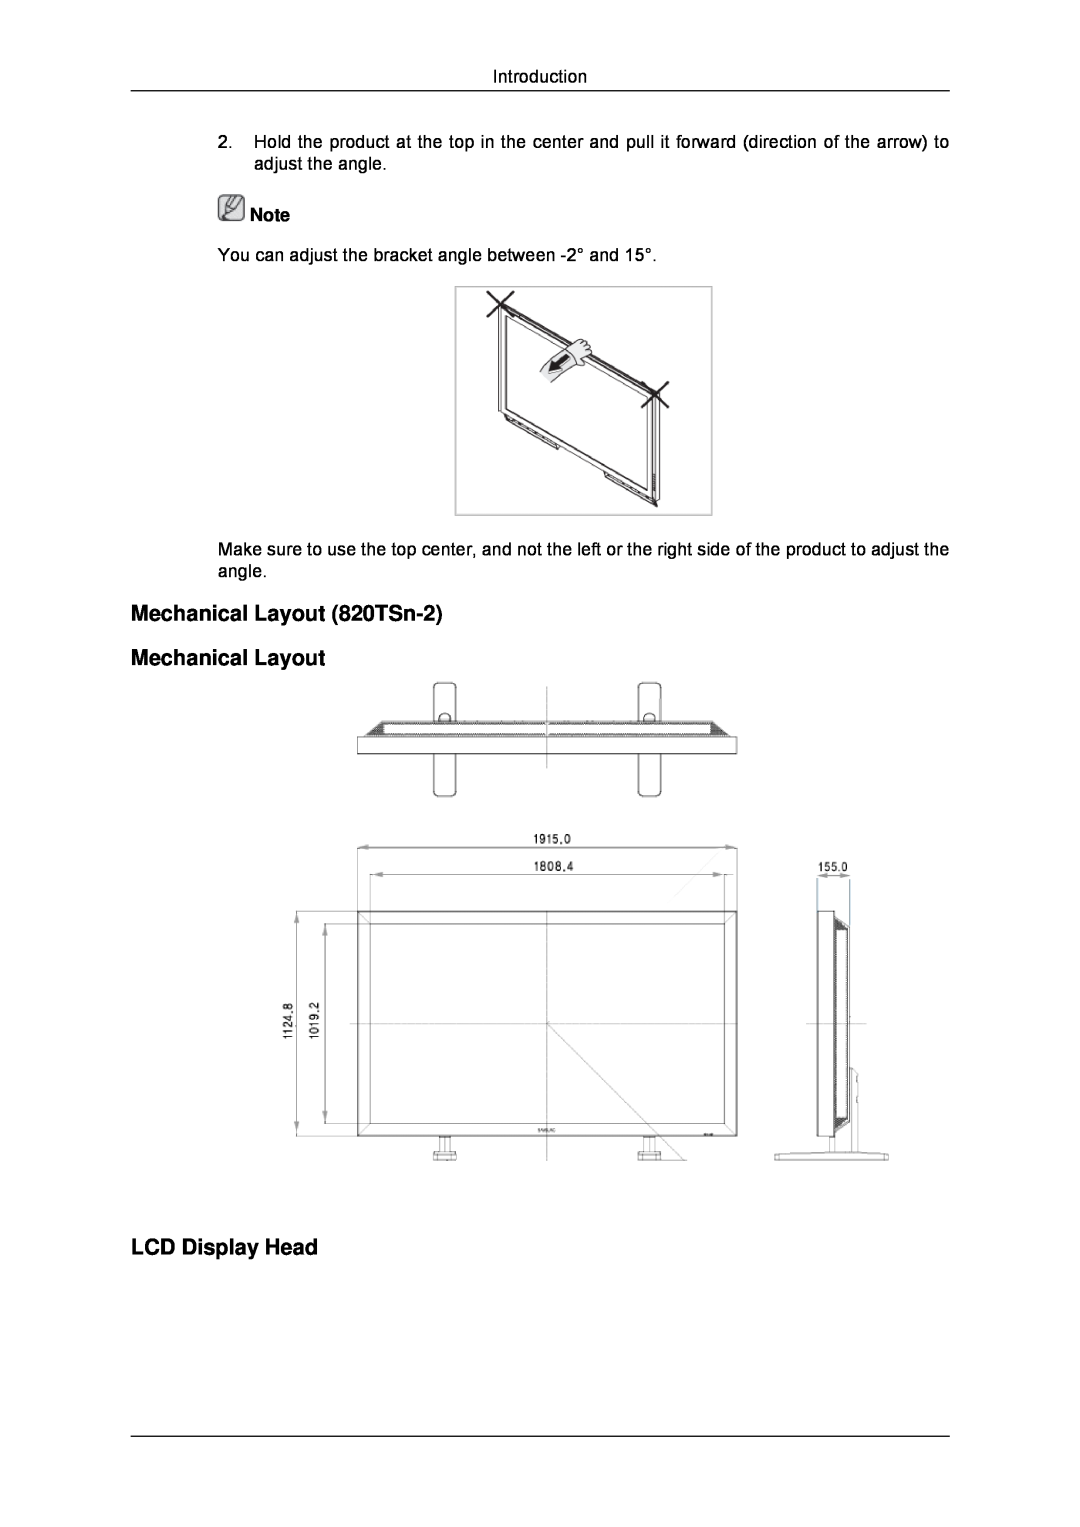 Samsung LH70TCSMBG/XJ, LH70TCUMBG/EN manual Mechanical Layout 820TSn-2 Mechanical Layout, LCD Display Head, Introduction 